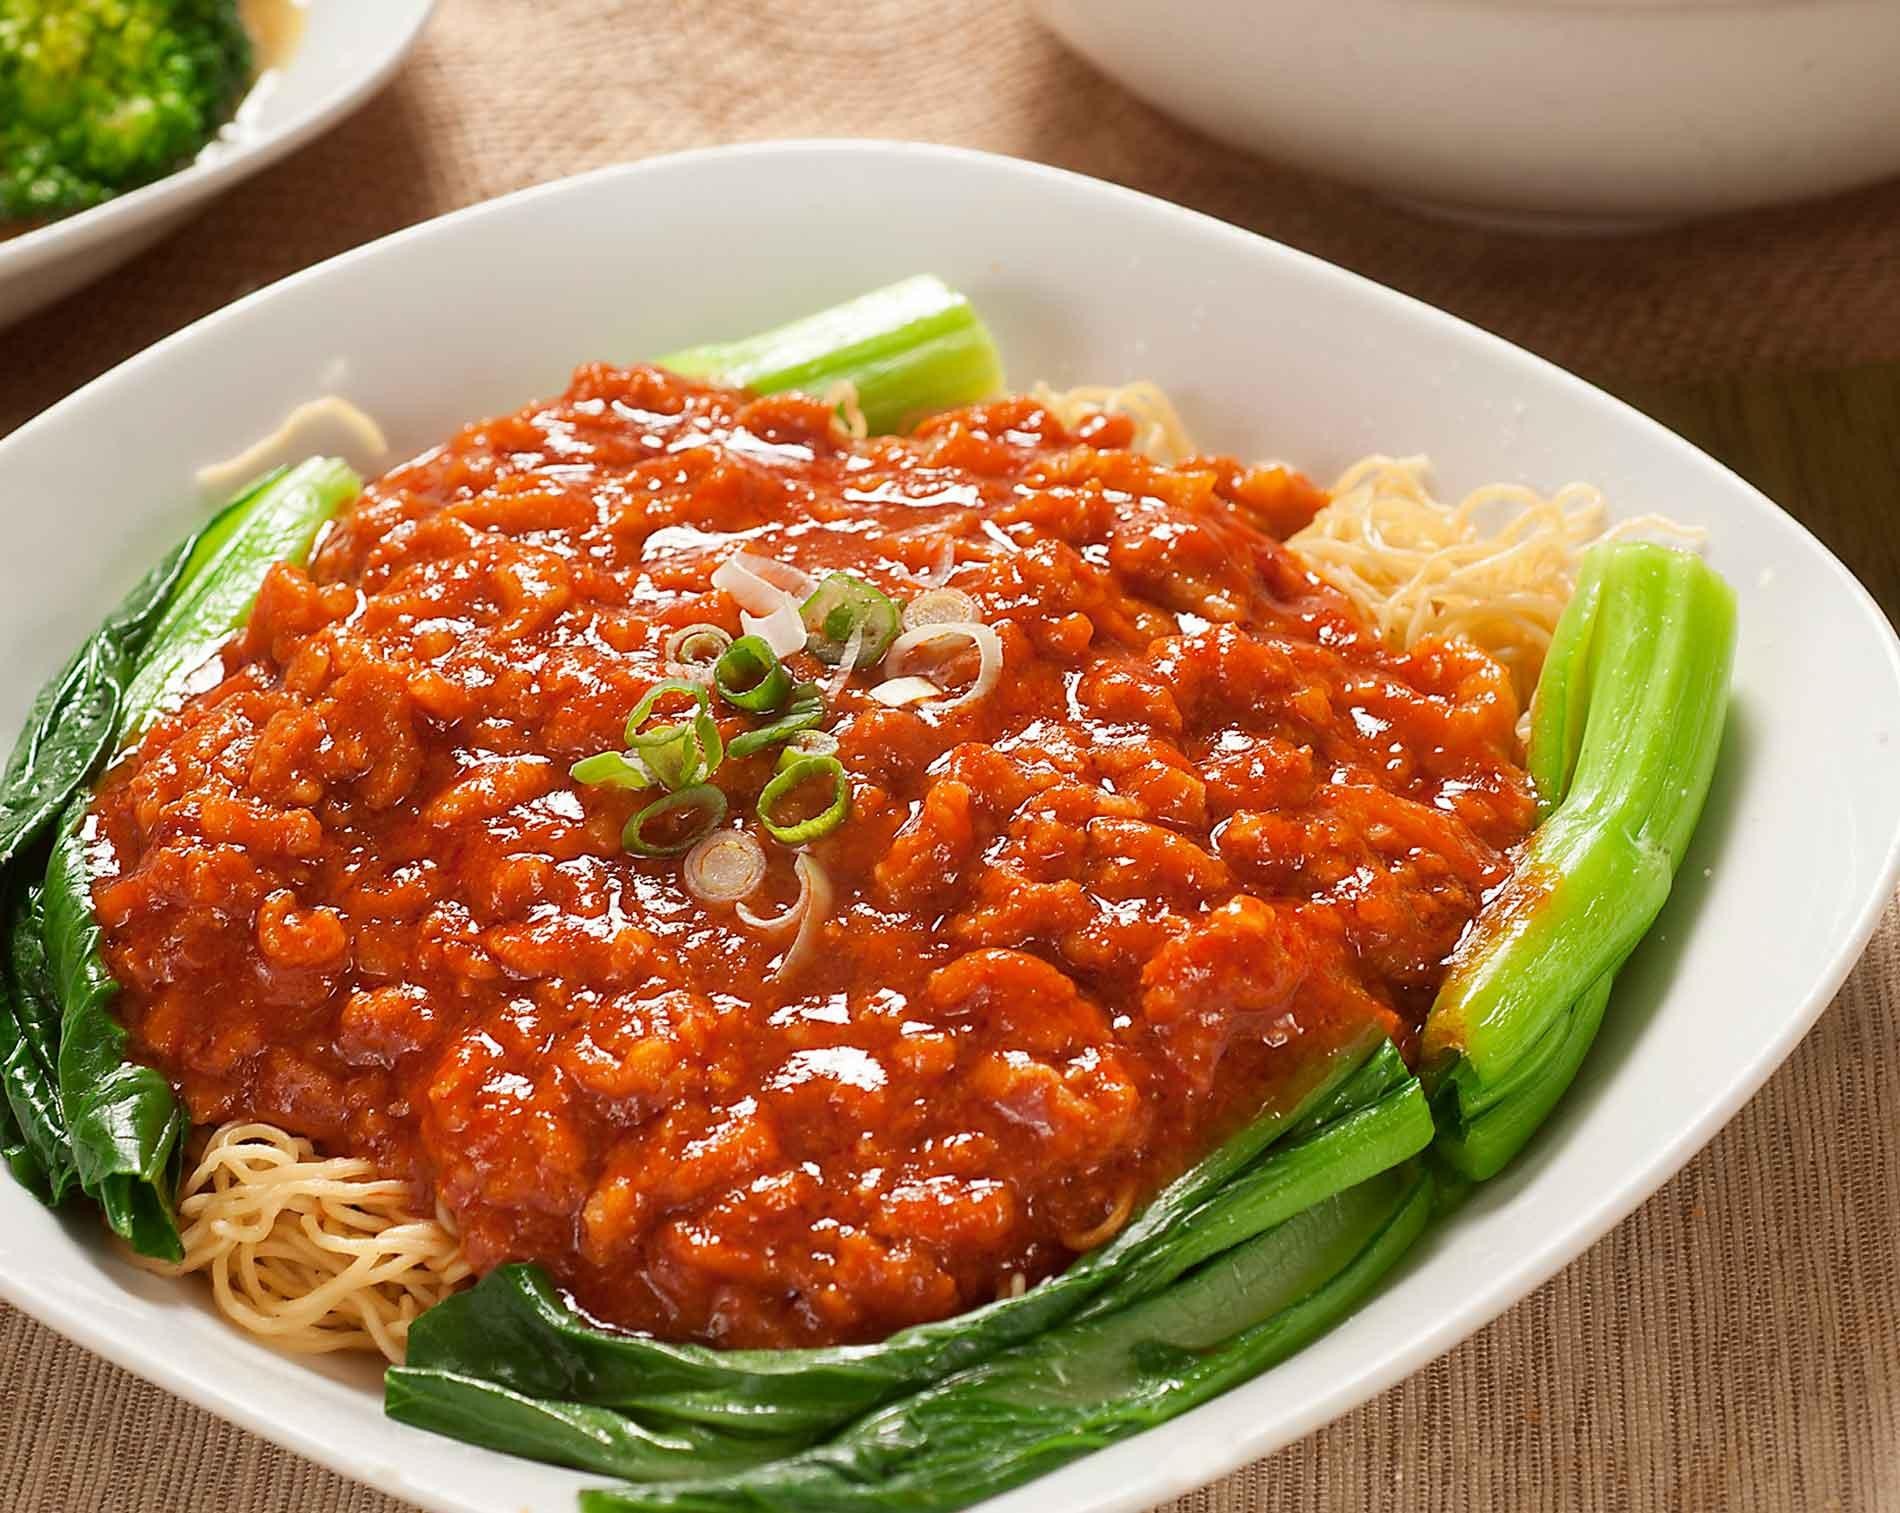 Spicy Shredded Pork Lo Mein in Special Sauce 港式炸醬撈麵